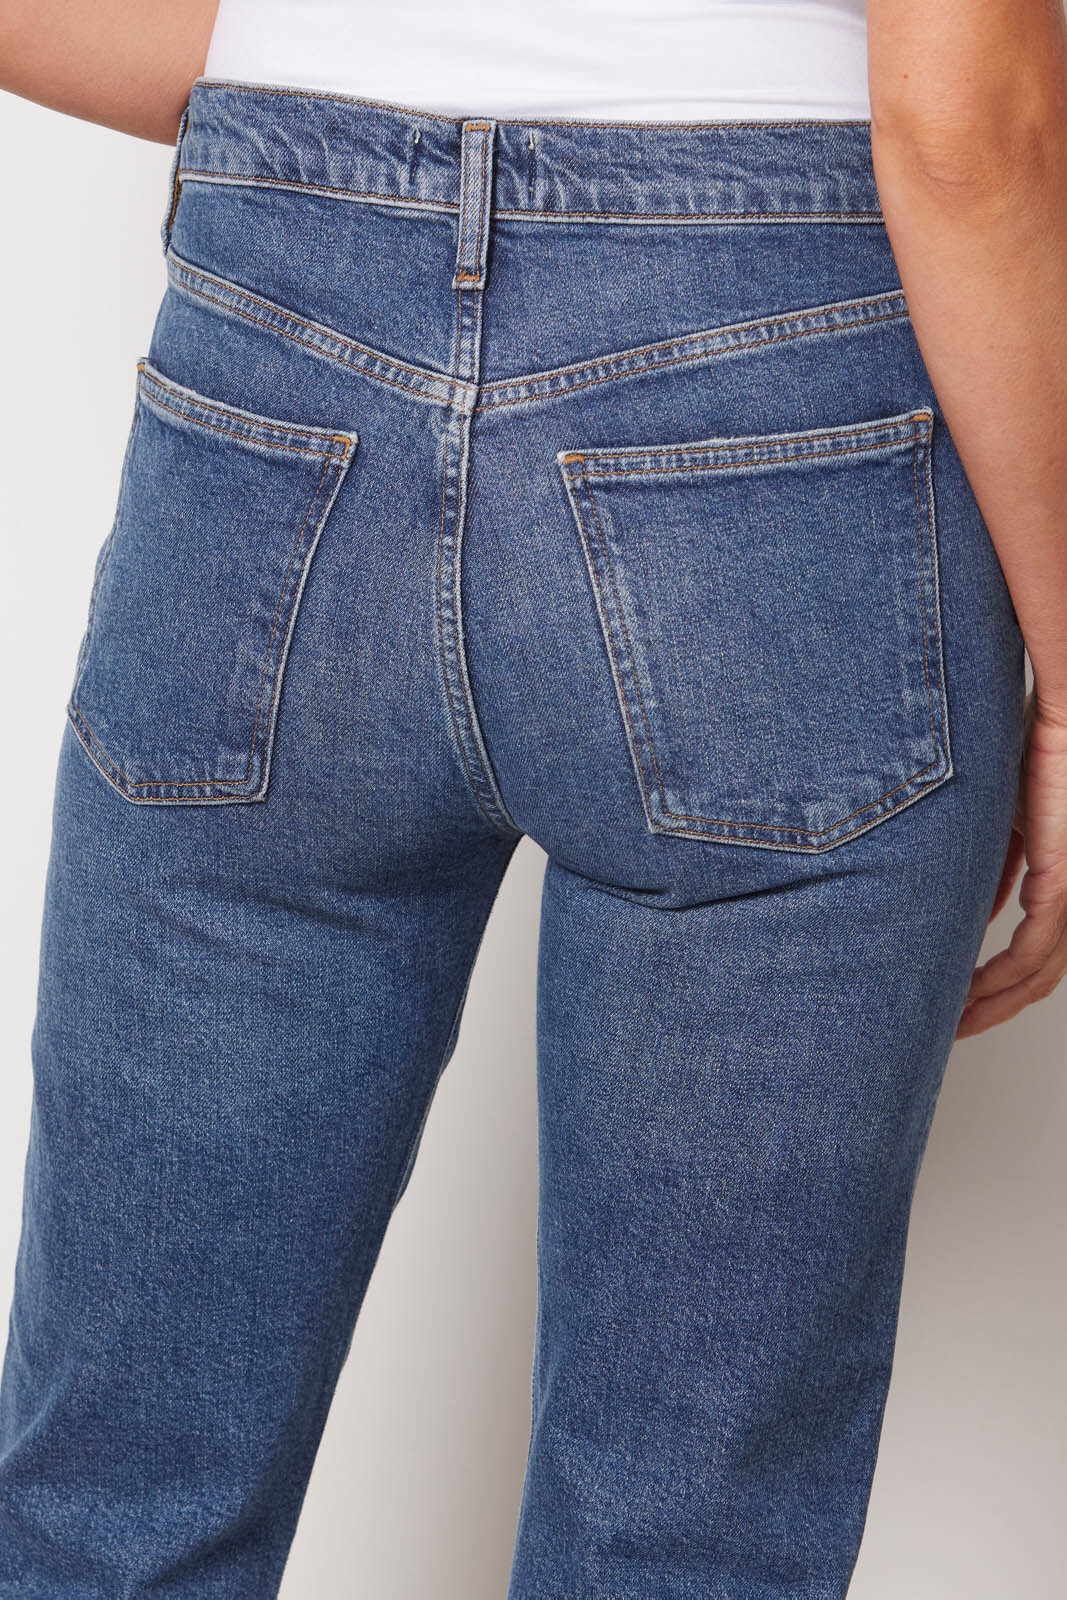 Merrel Straight Jean